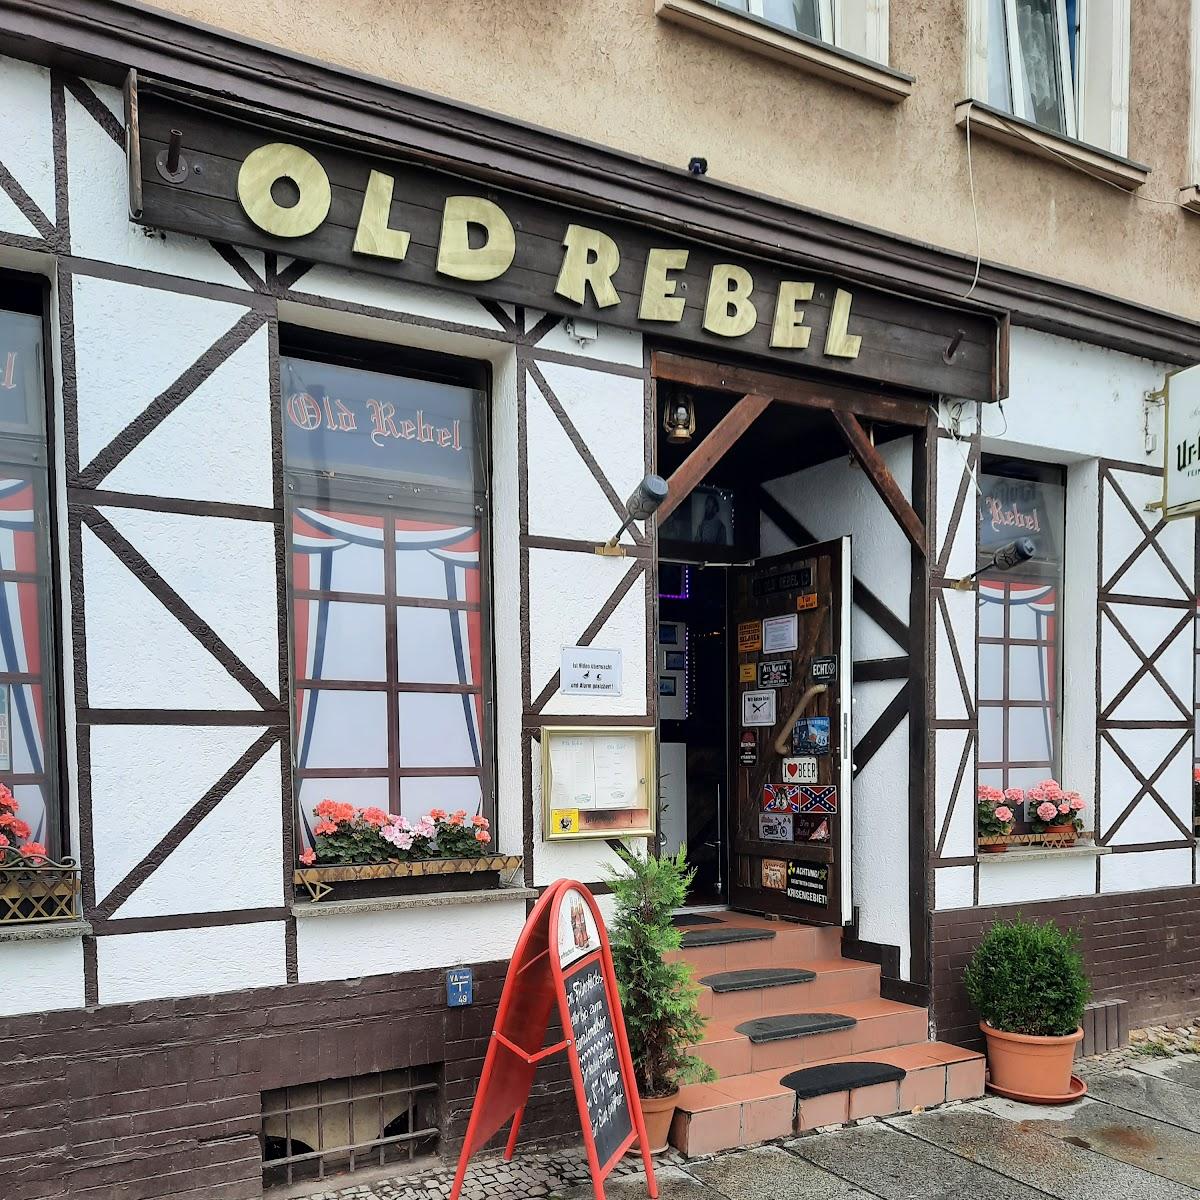 Restaurant "Old Rebel" in Leipzig